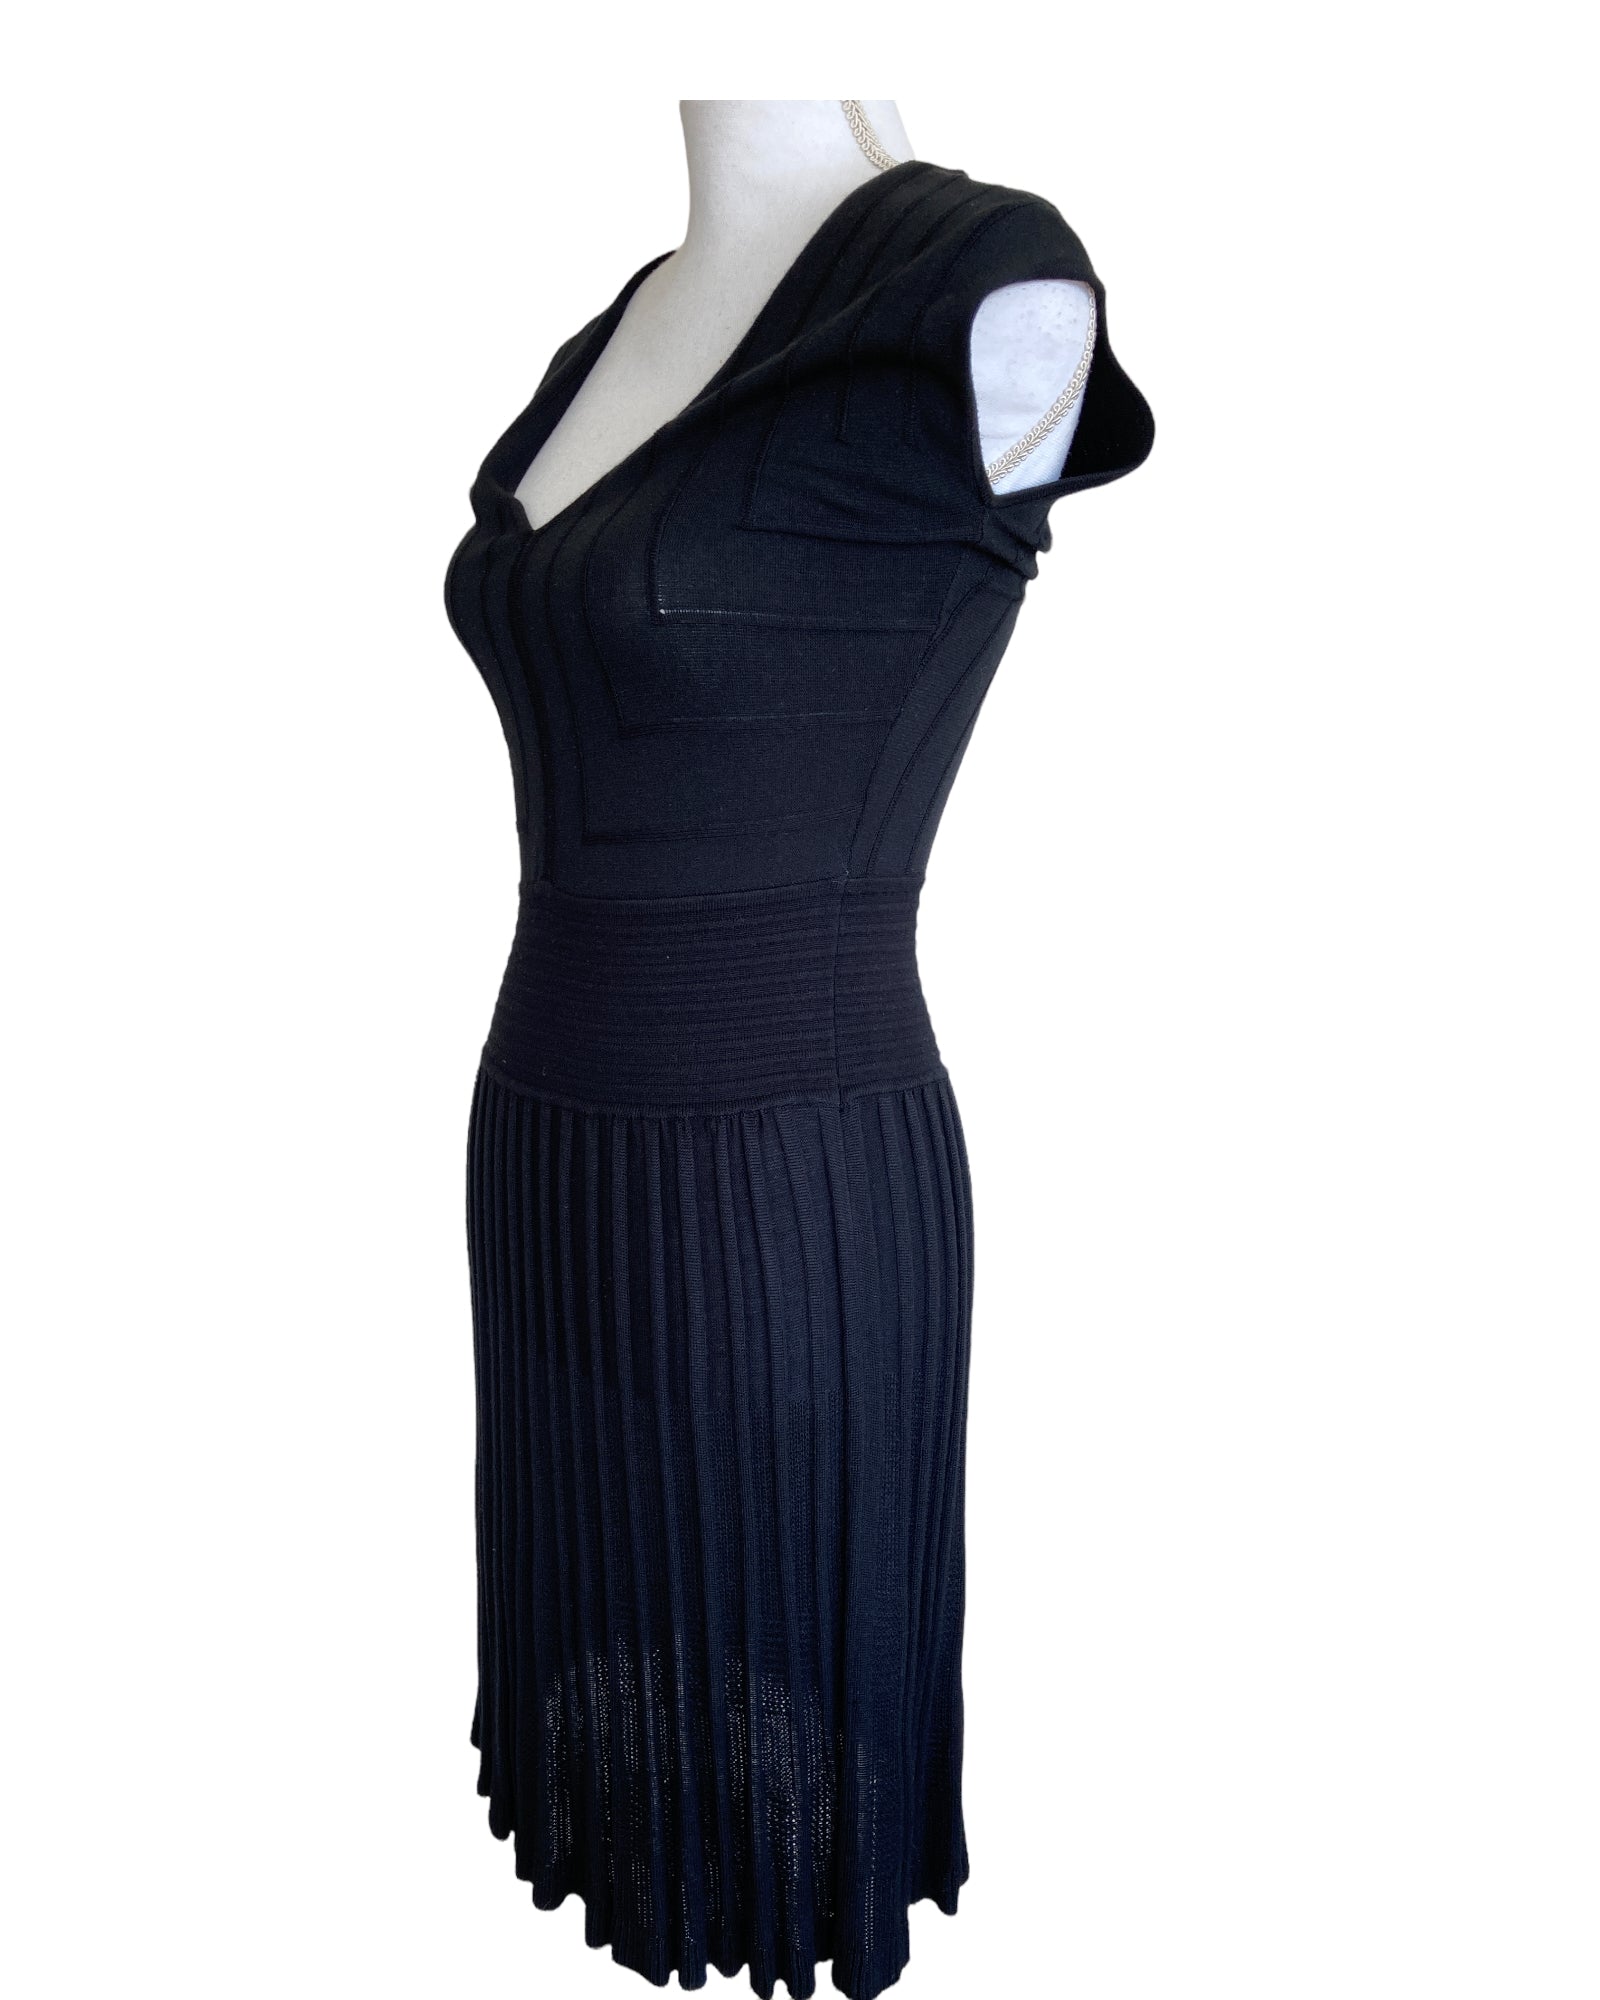 Max Studio Black Stretch Cap Sleeve Dress, S